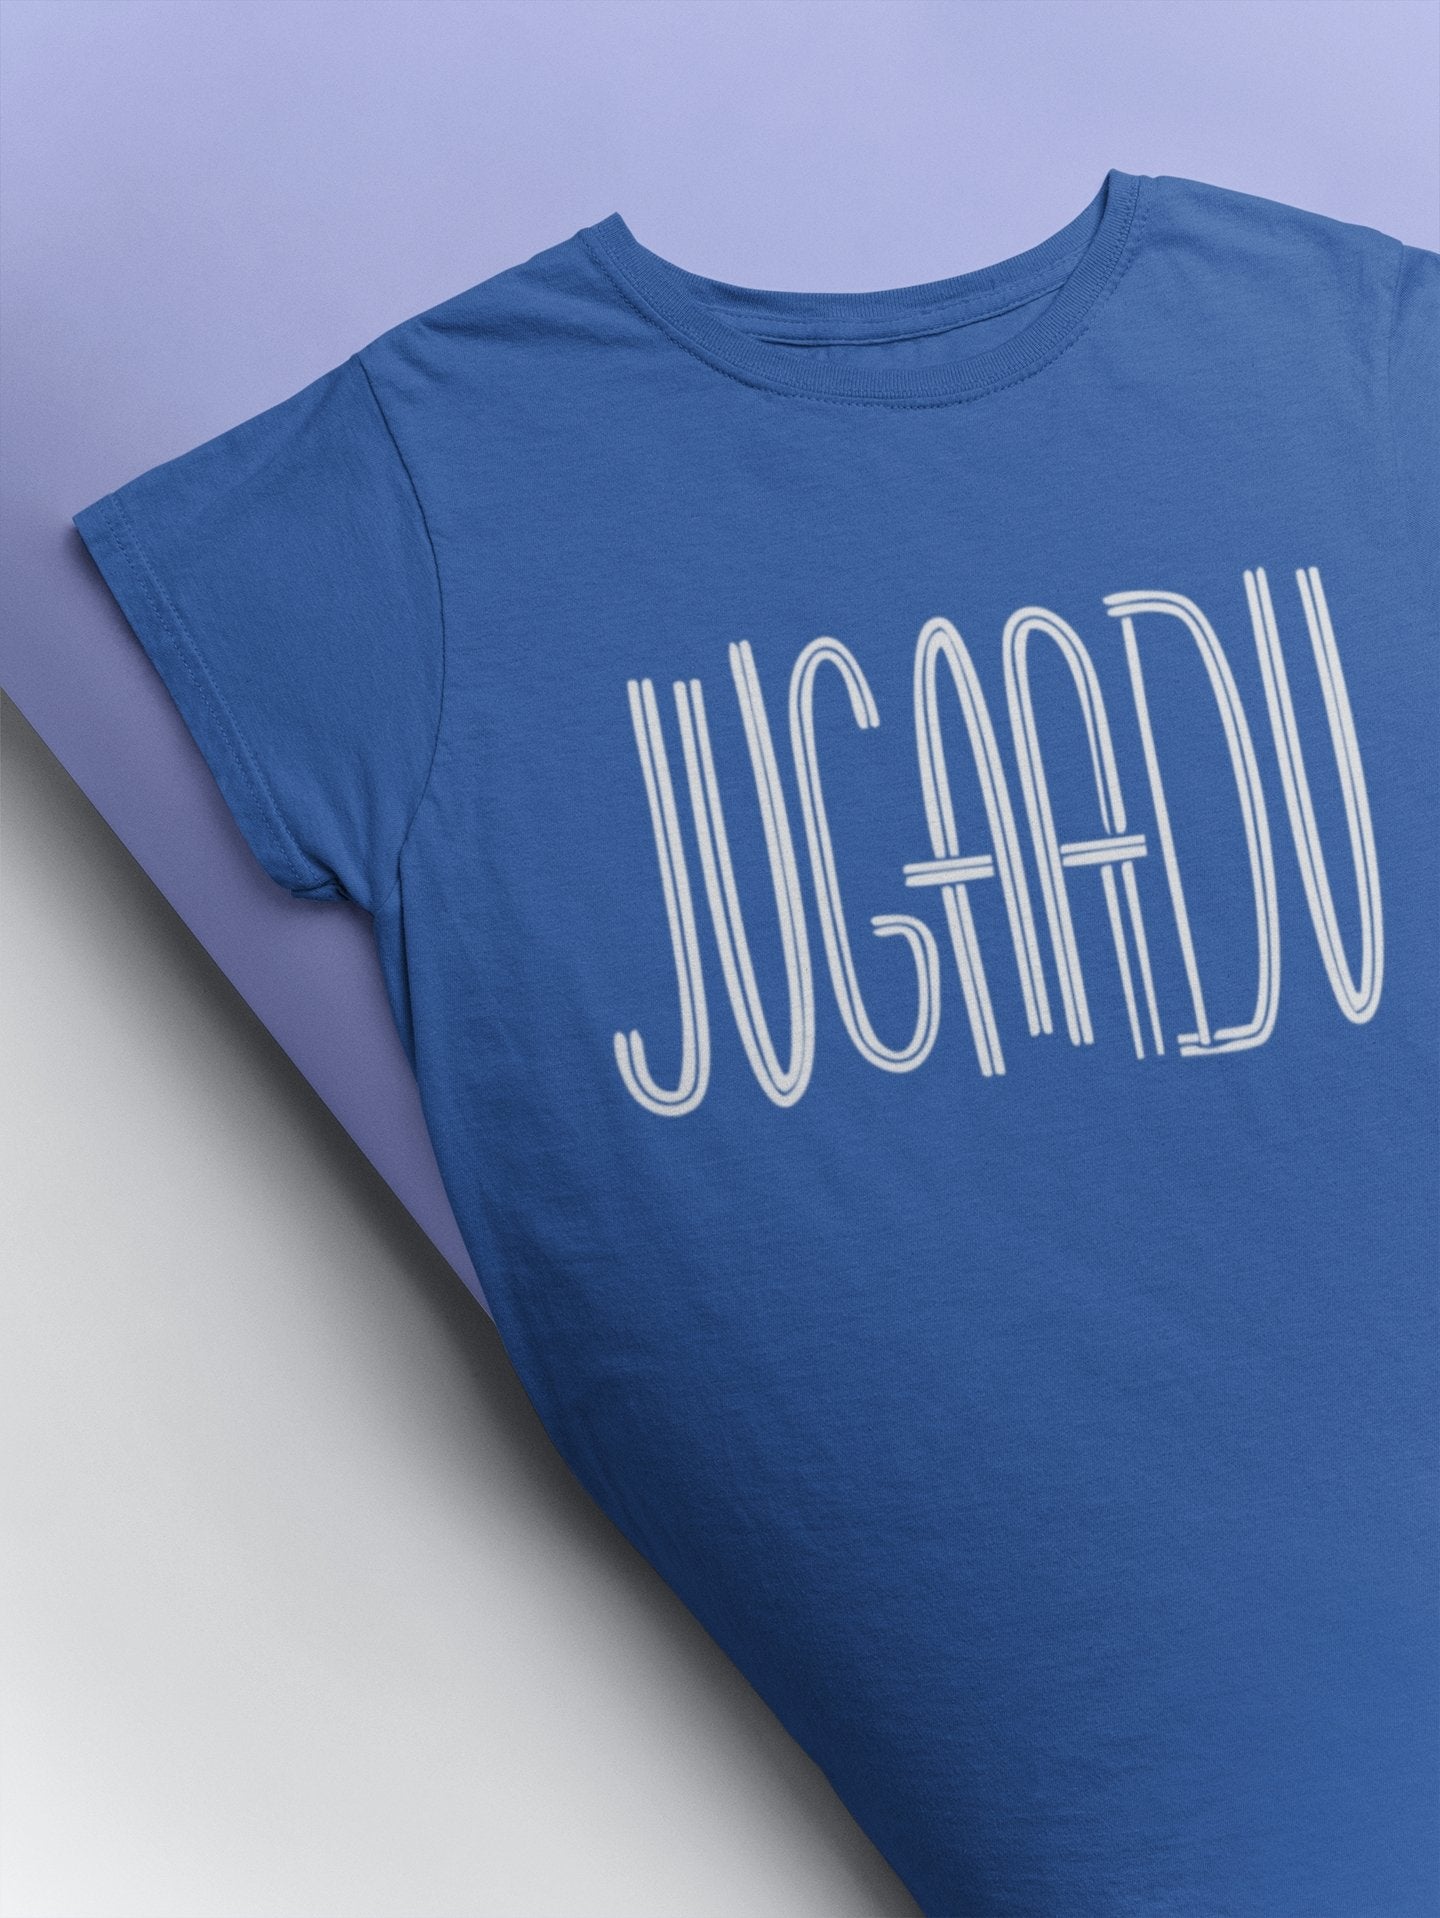 Jugaadu Desi Mens Half Sleeves T-shirt- FunkyTeesClub - Funky Tees Club